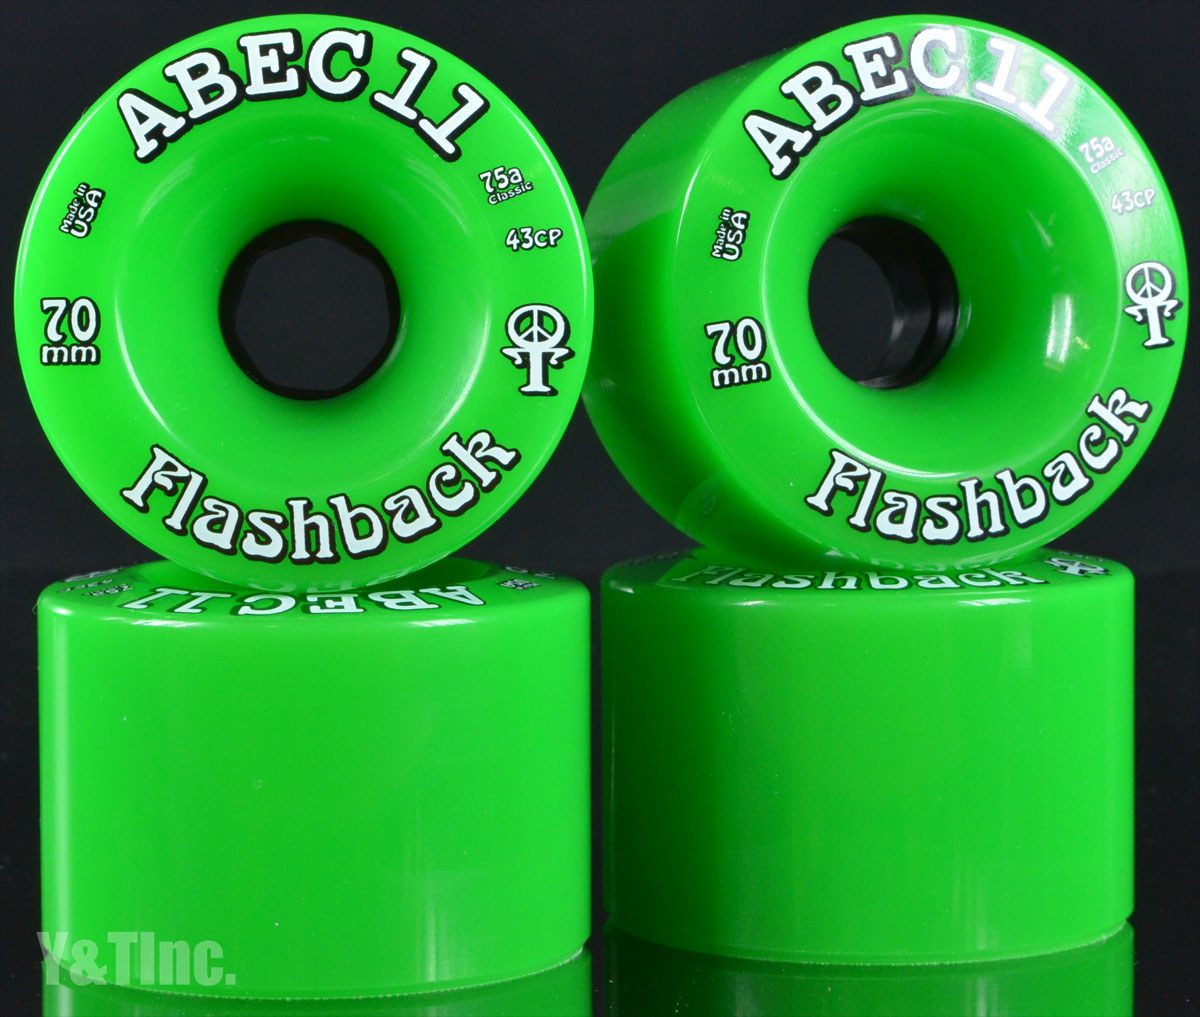 ABEC11 Flashbacks 70mm 75a 1